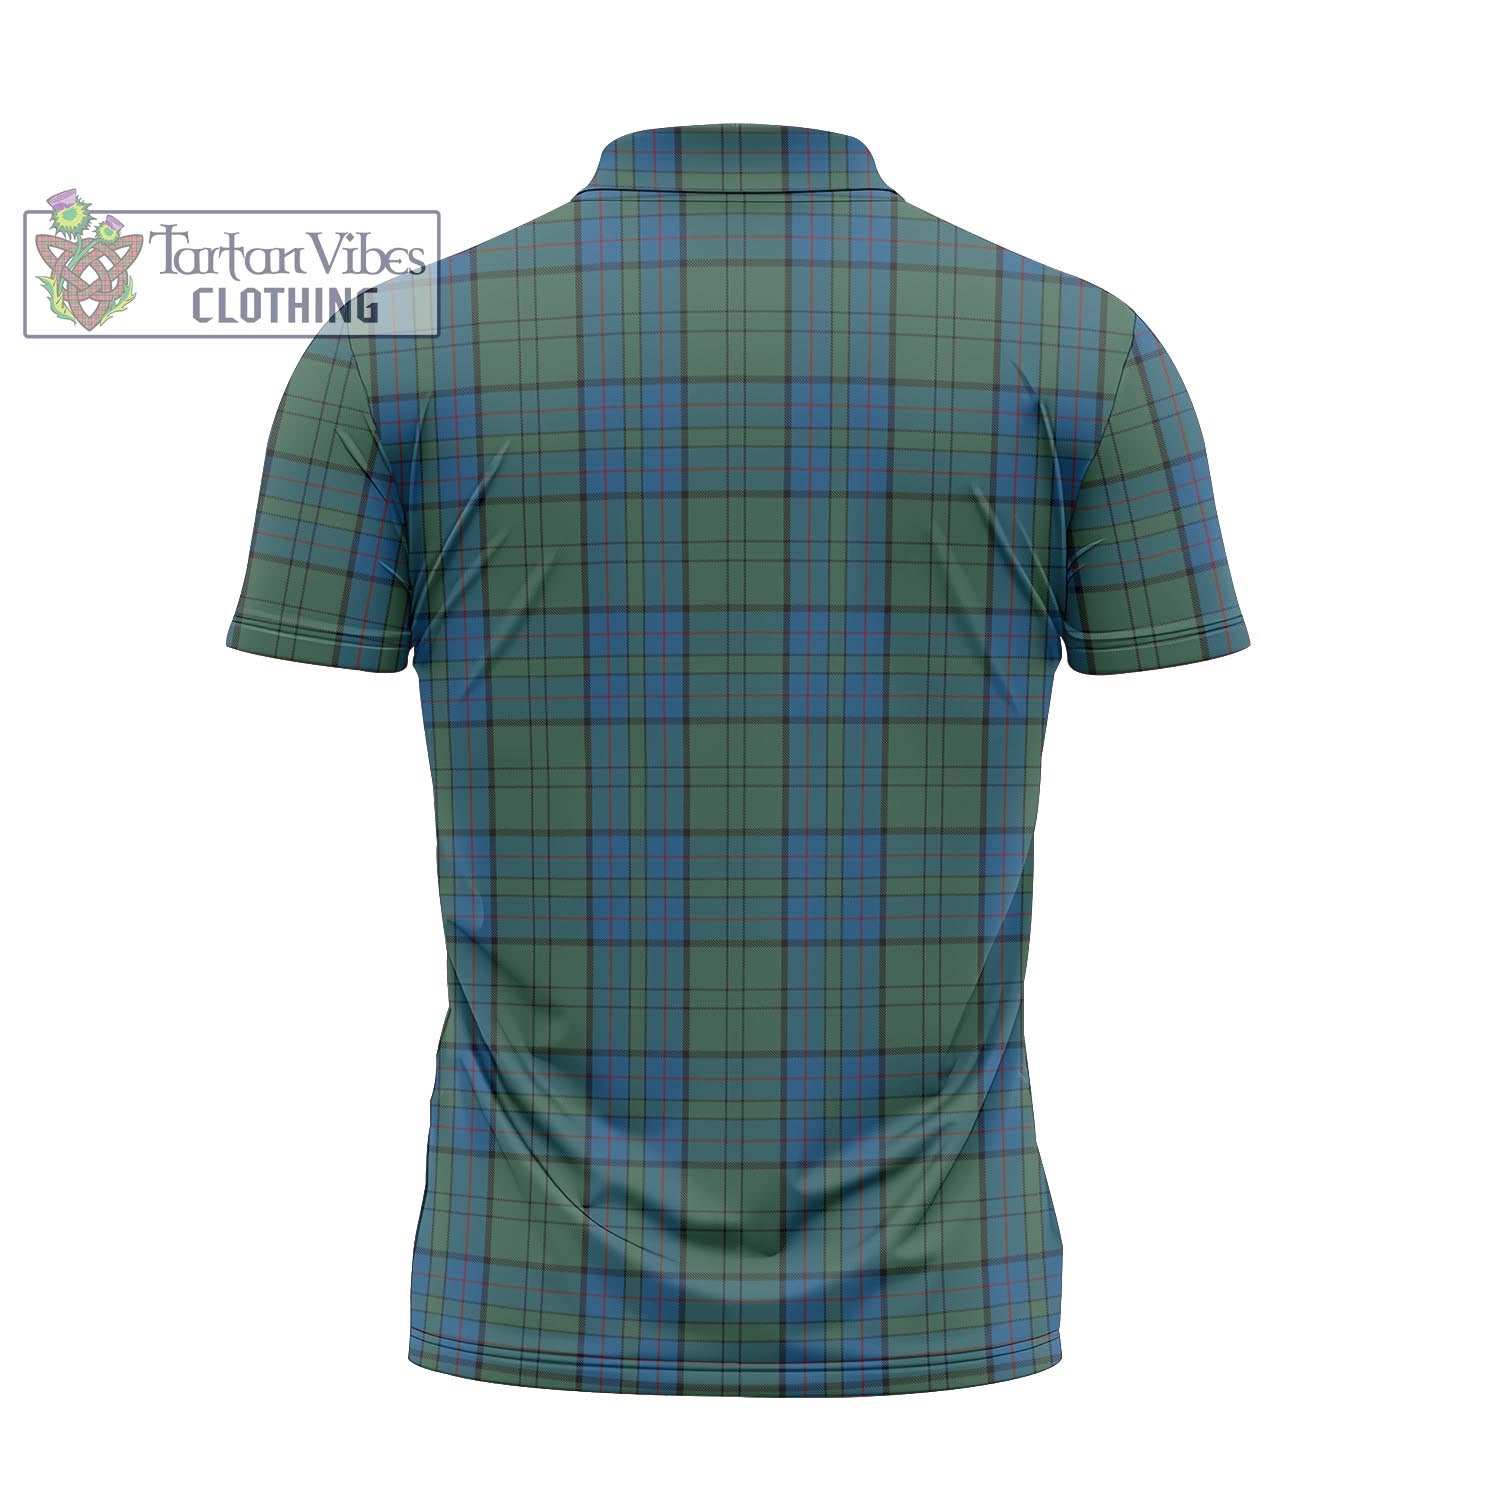 Tartan Vibes Clothing Lockhart Tartan Zipper Polo Shirt with Family Crest